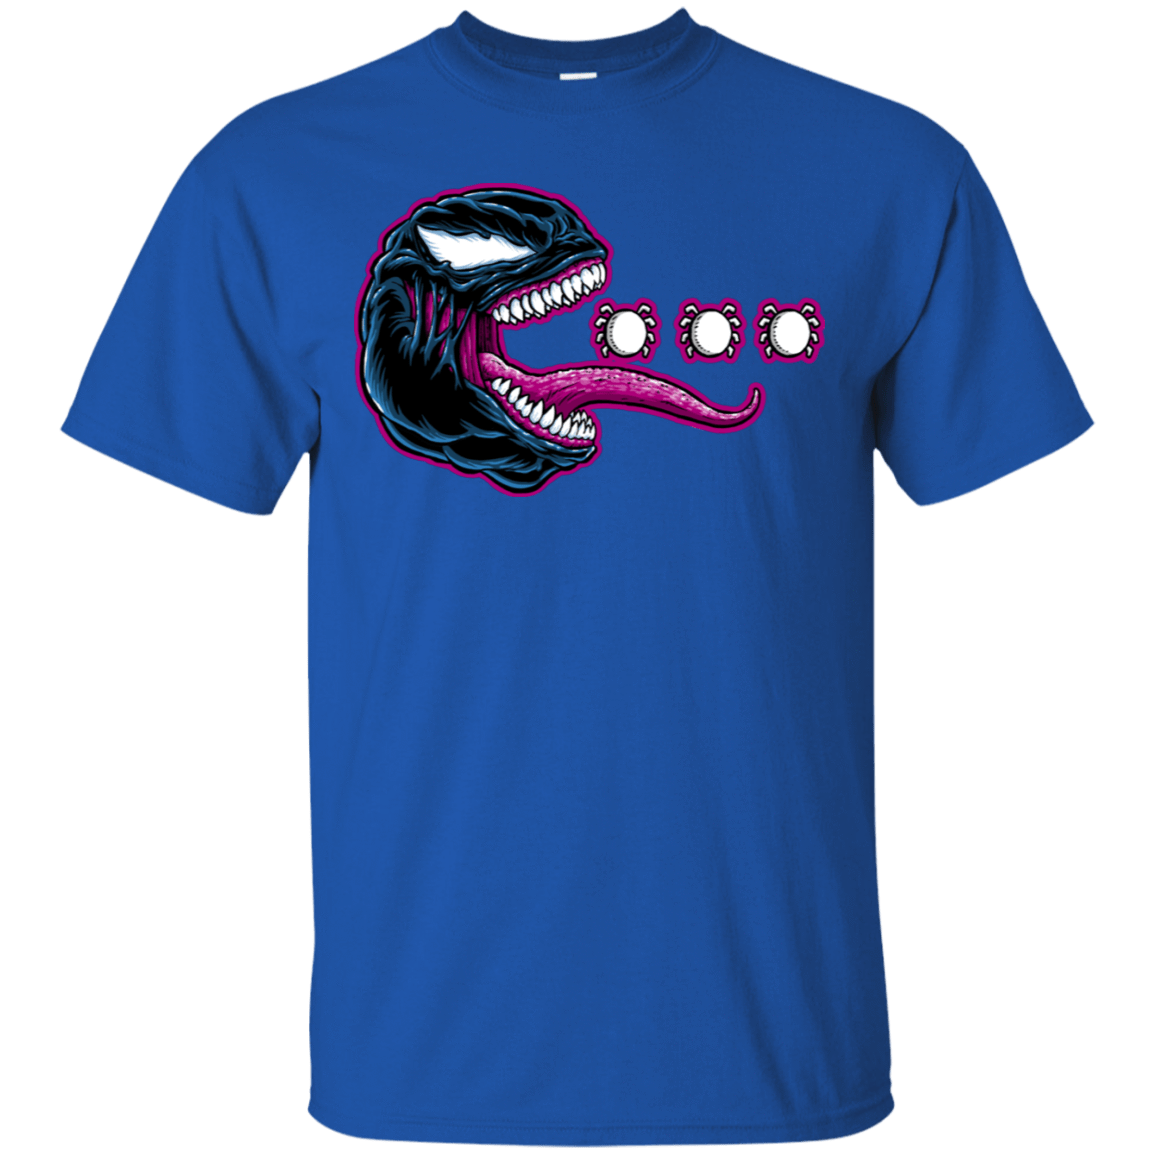 T-Shirts Royal / S Pac Venom T-Shirt